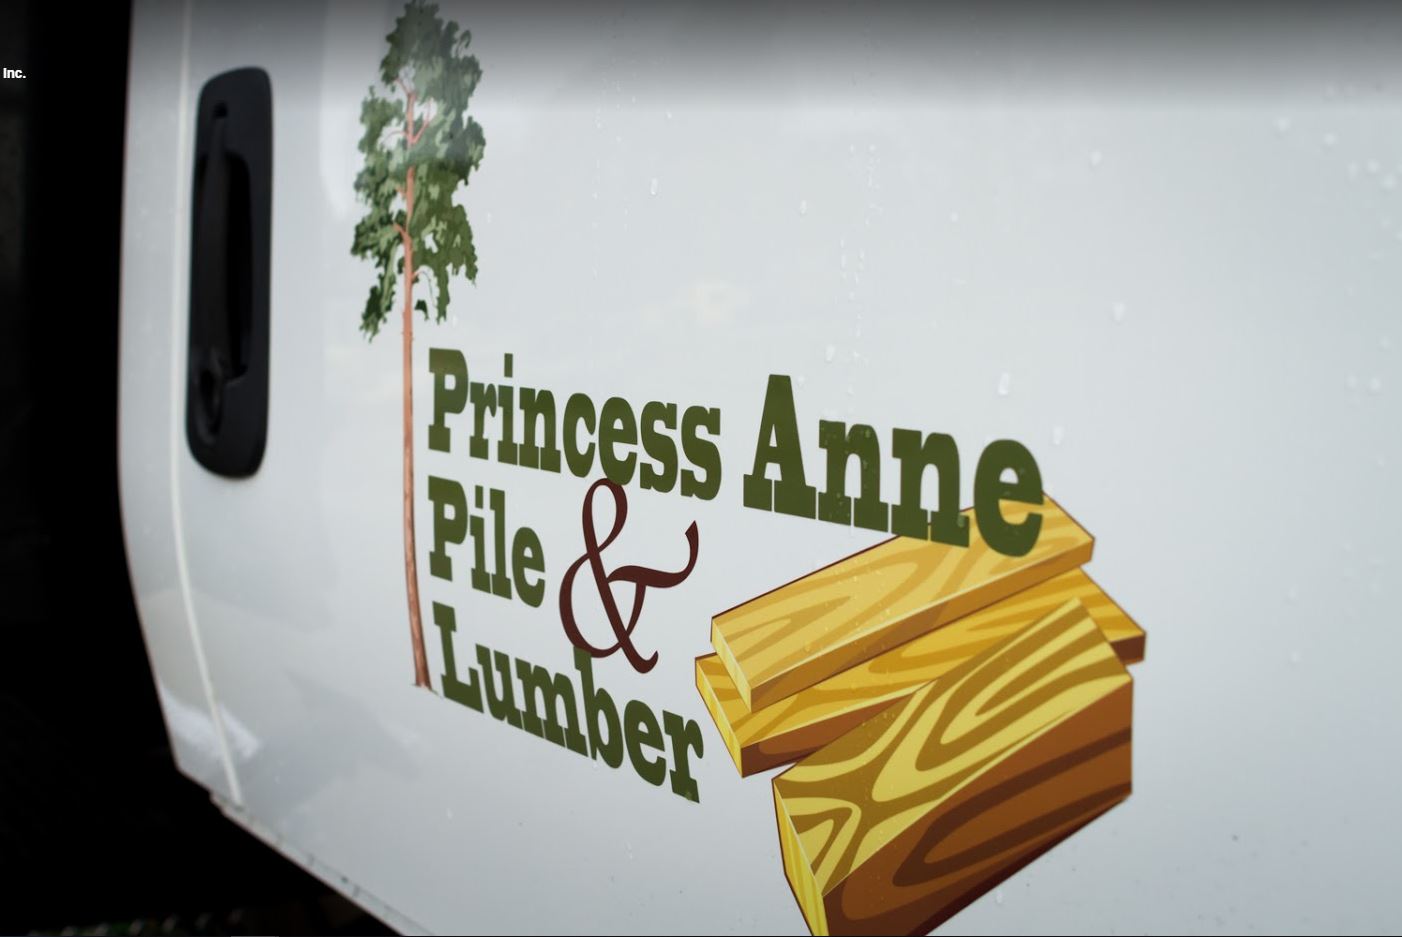 Princess Anne Pile & Lumber Inc. Photo